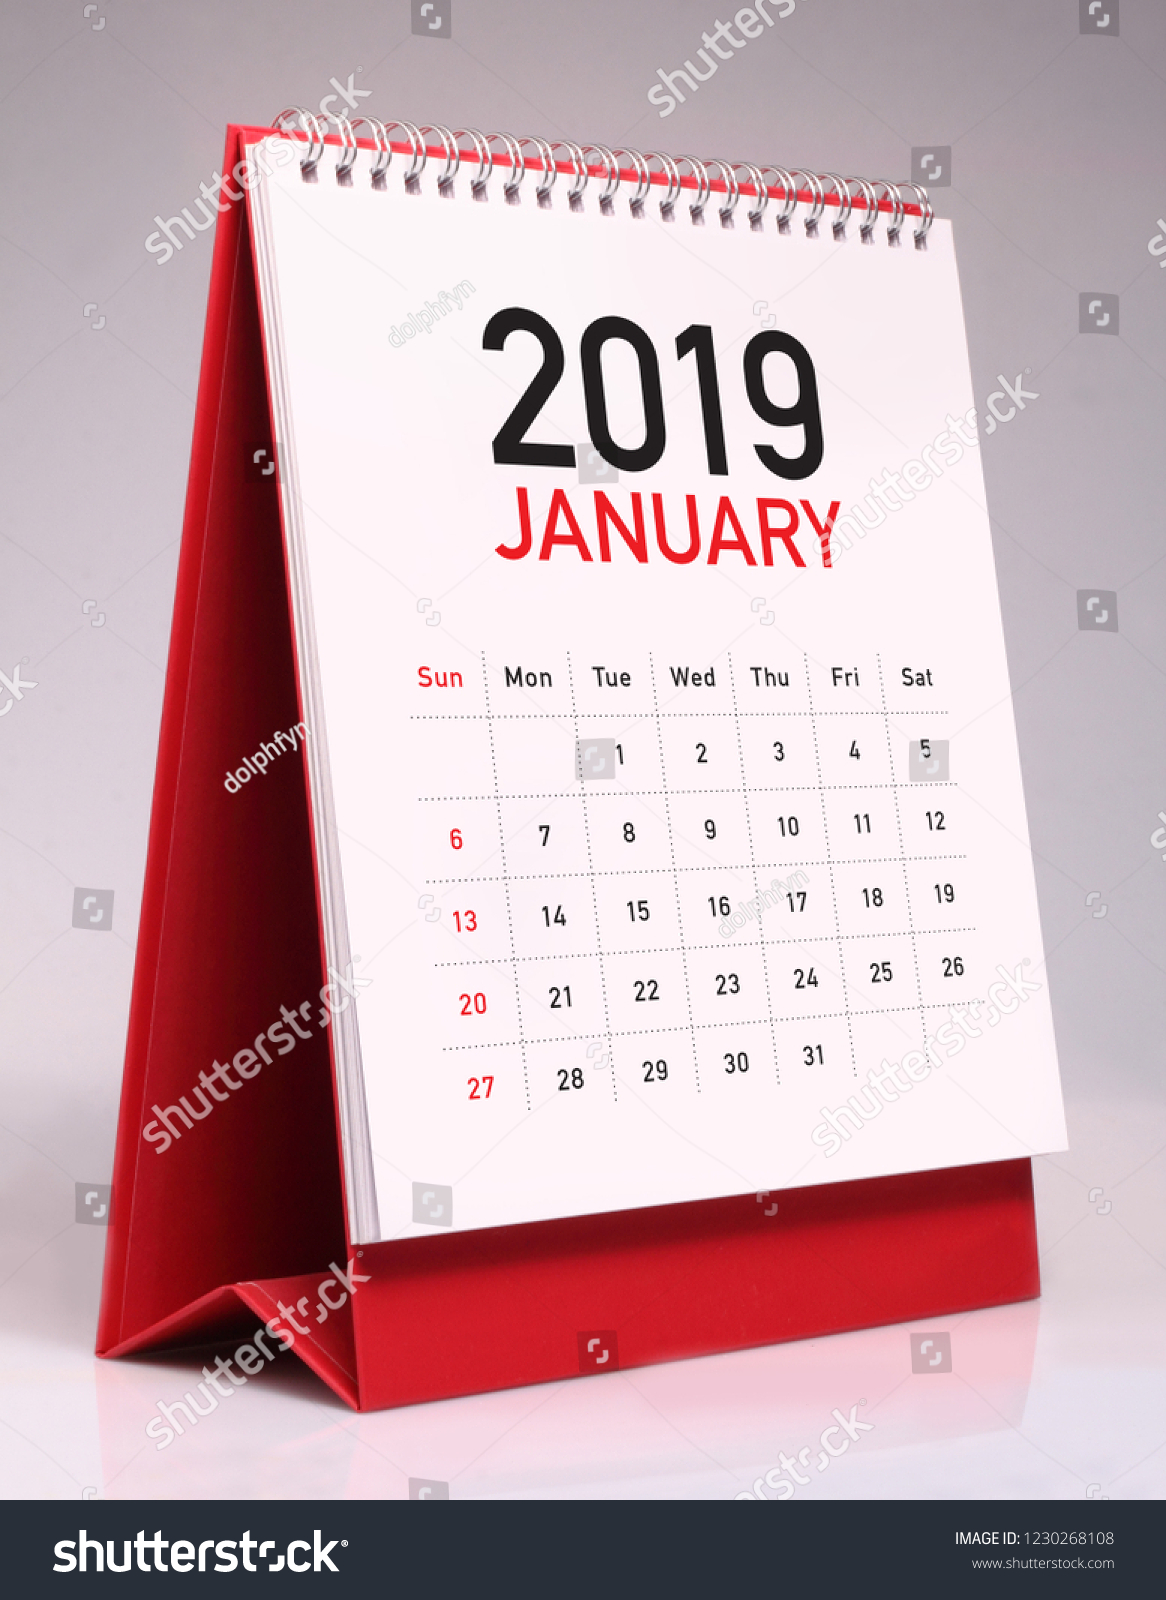 4,452 2019 desk calendar Stock Photos, Images & Photography | Shutterstock